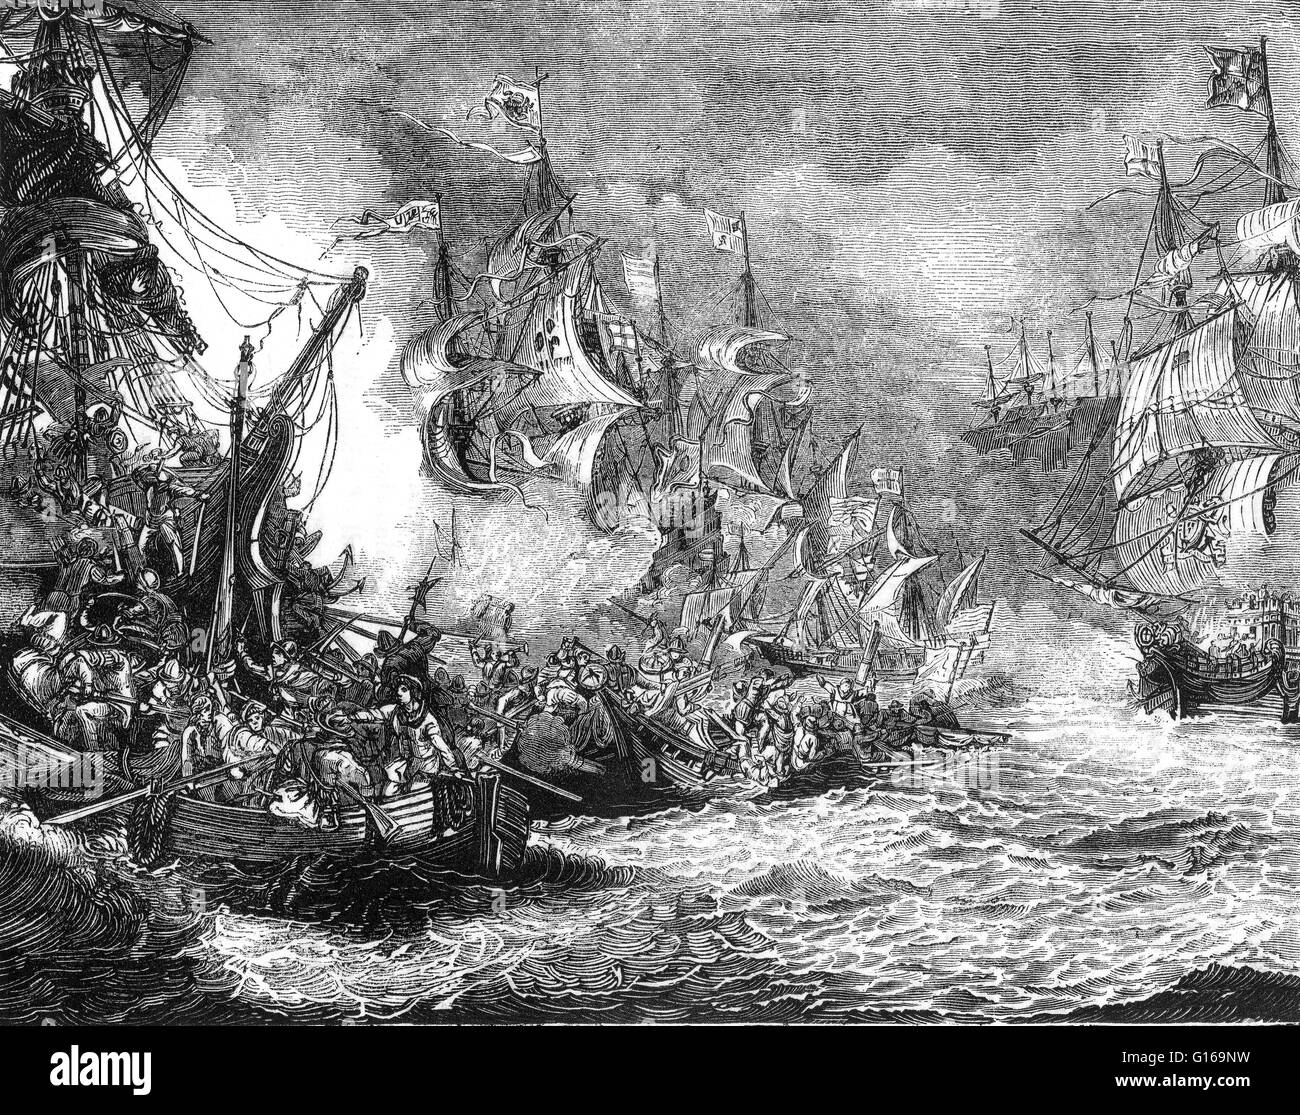 Разгром англией непобедимой армады участники. Разгром непобедимой Армады 1588. Фрэнсис Дрейк разгром непобедимой Армады. Испанская Армада 1588. Испанская Армада 1588 флот.